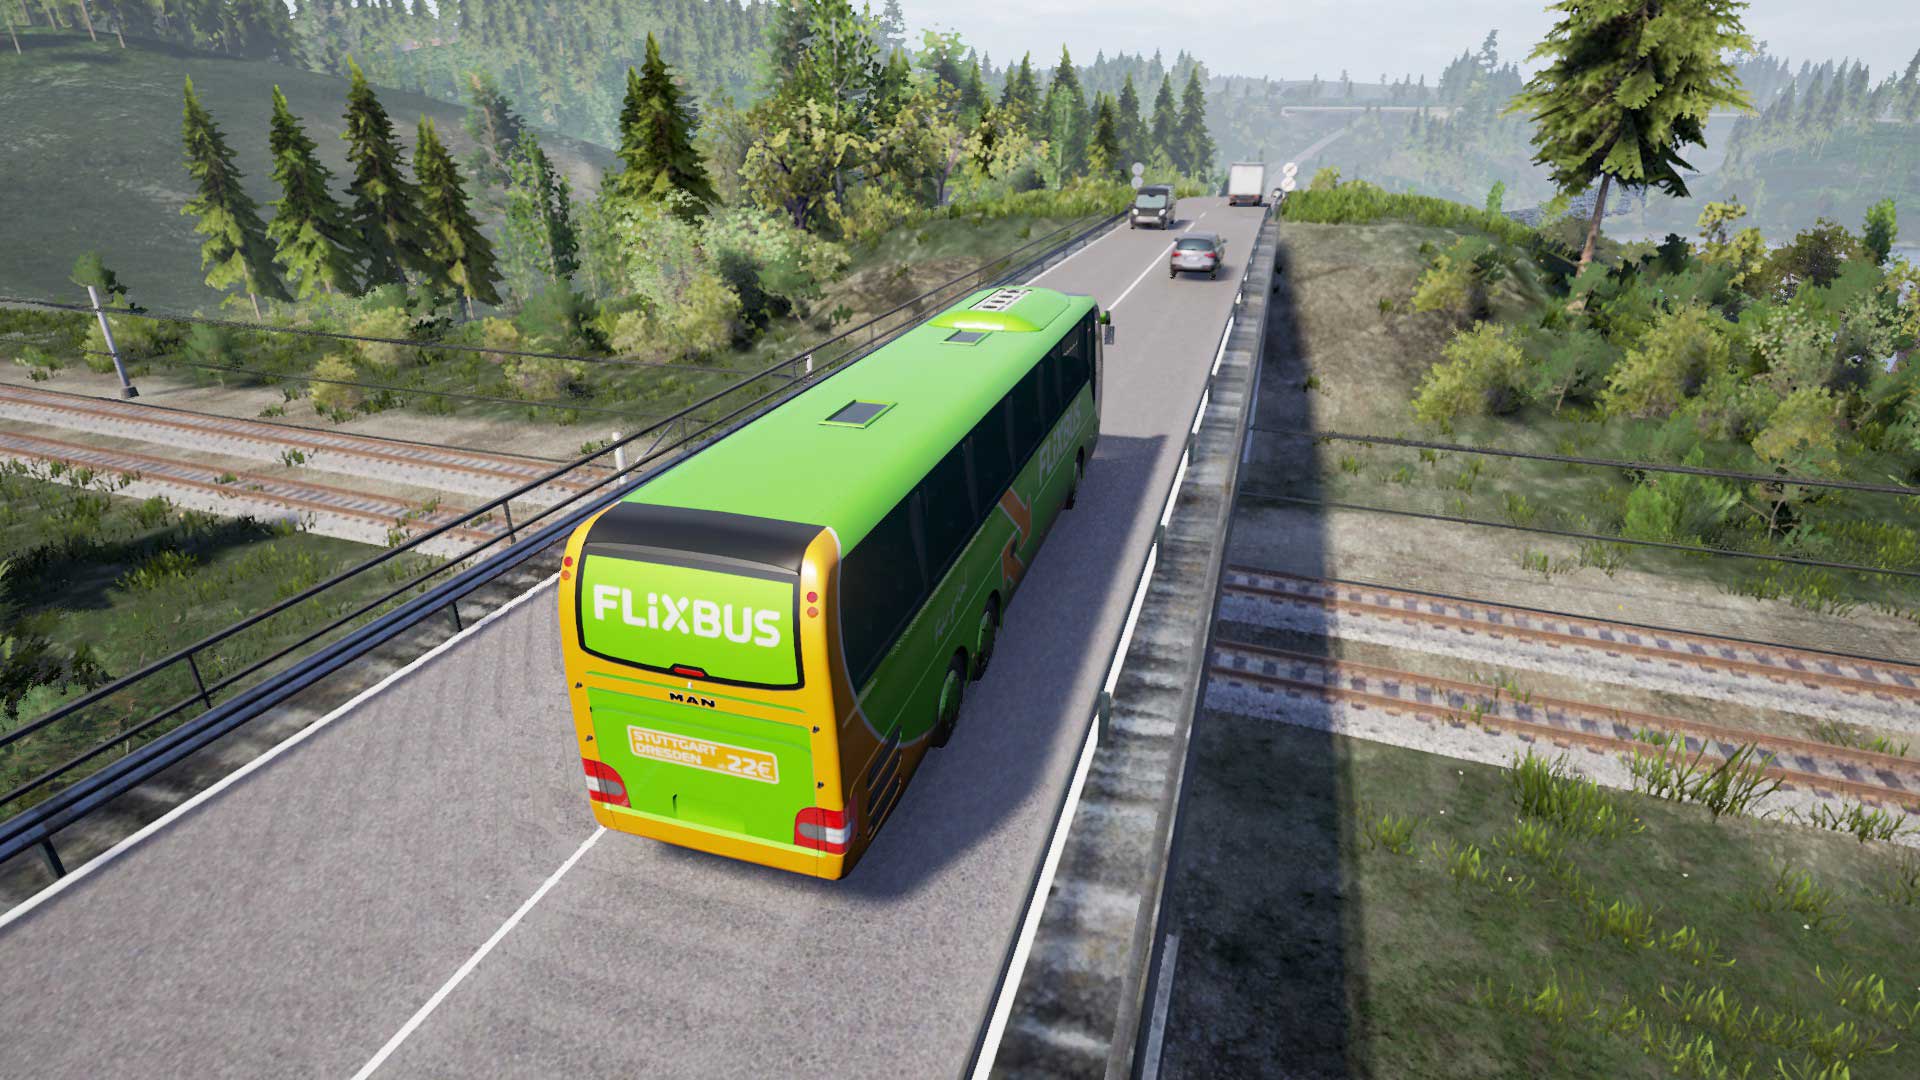 fernbus simulator map mods